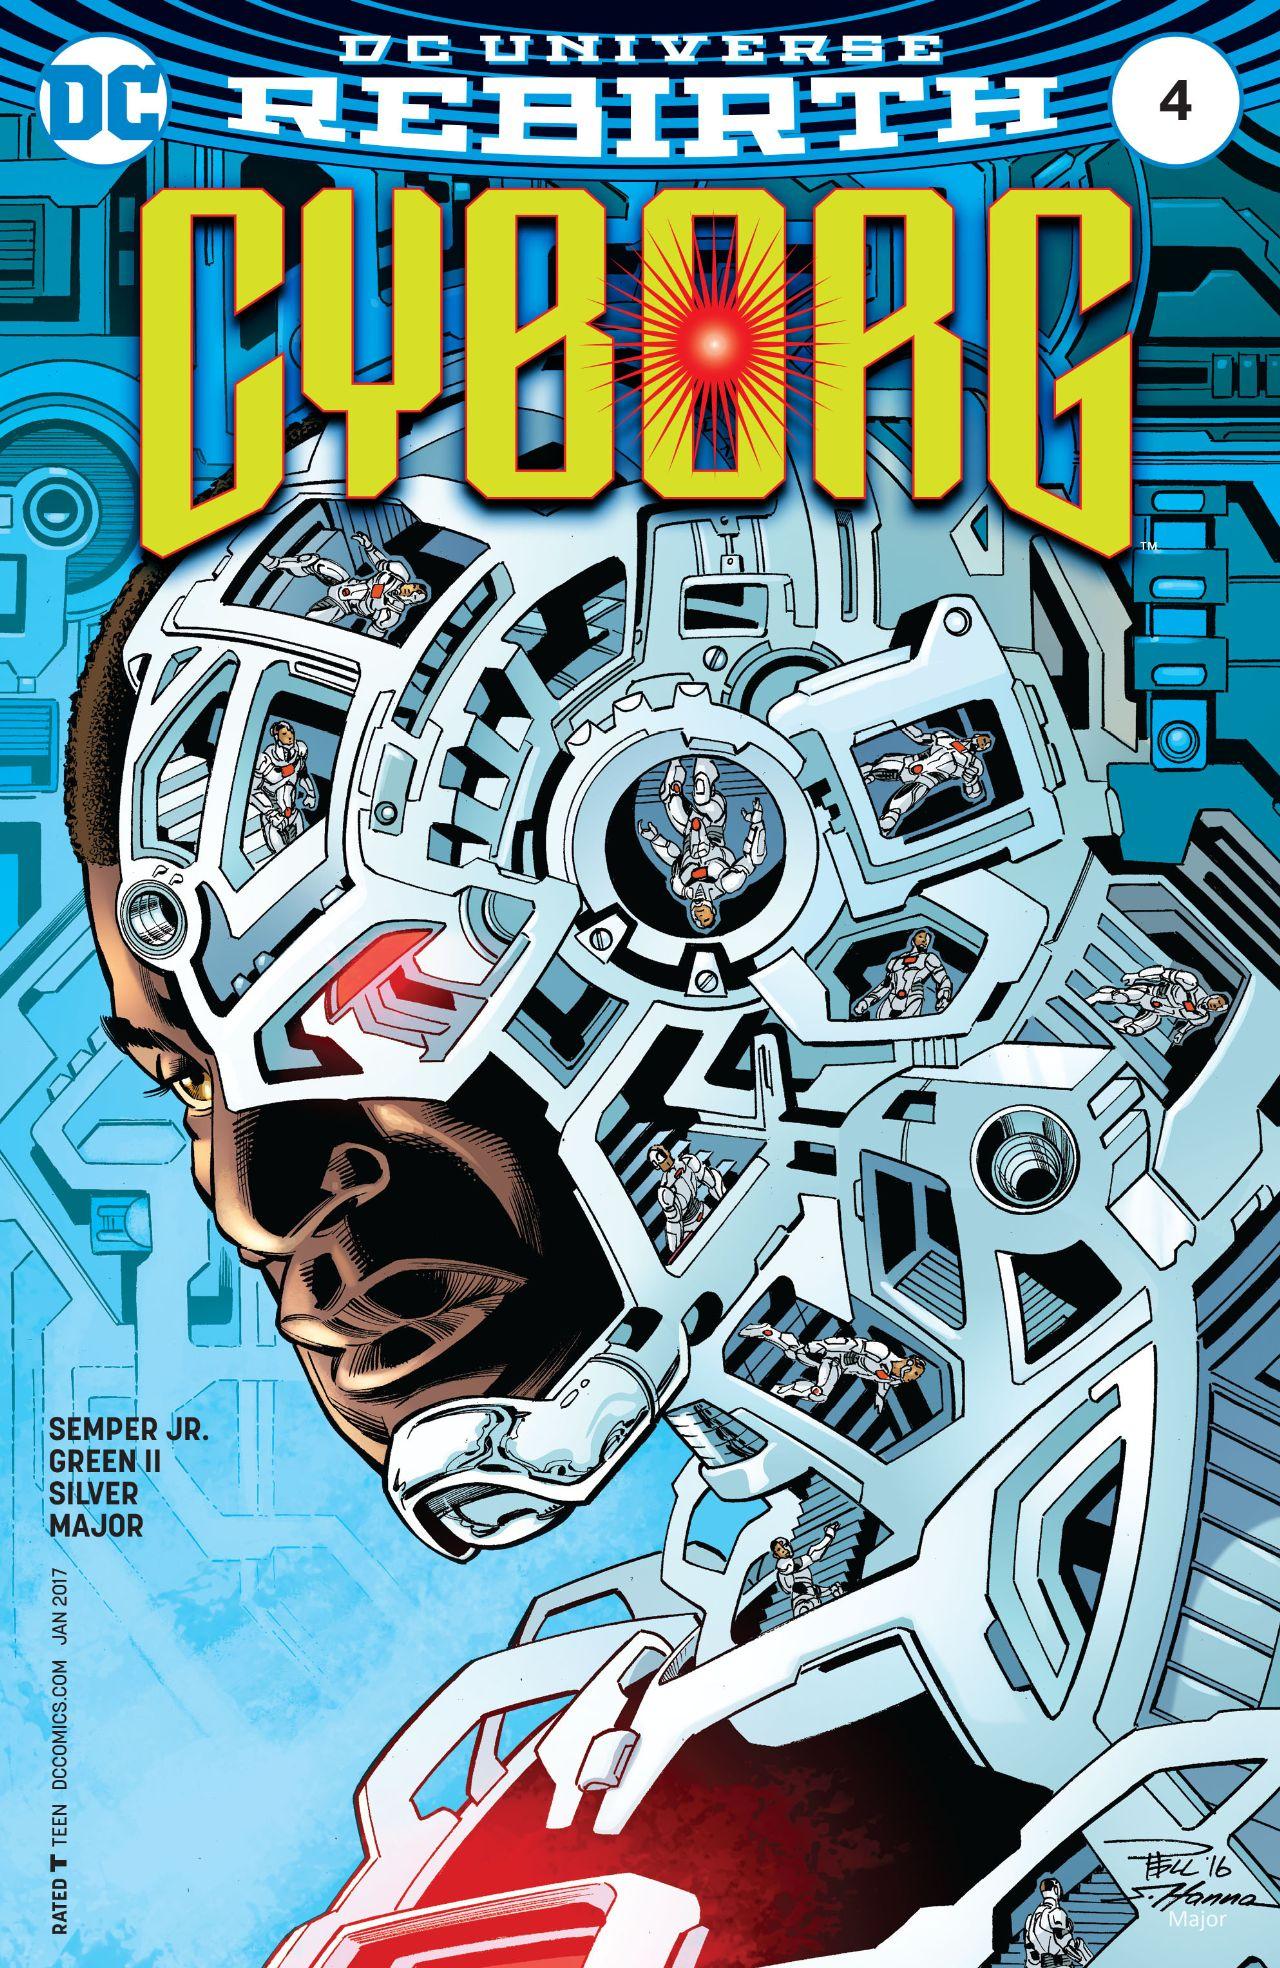 Cyborg Vol. 2 #4